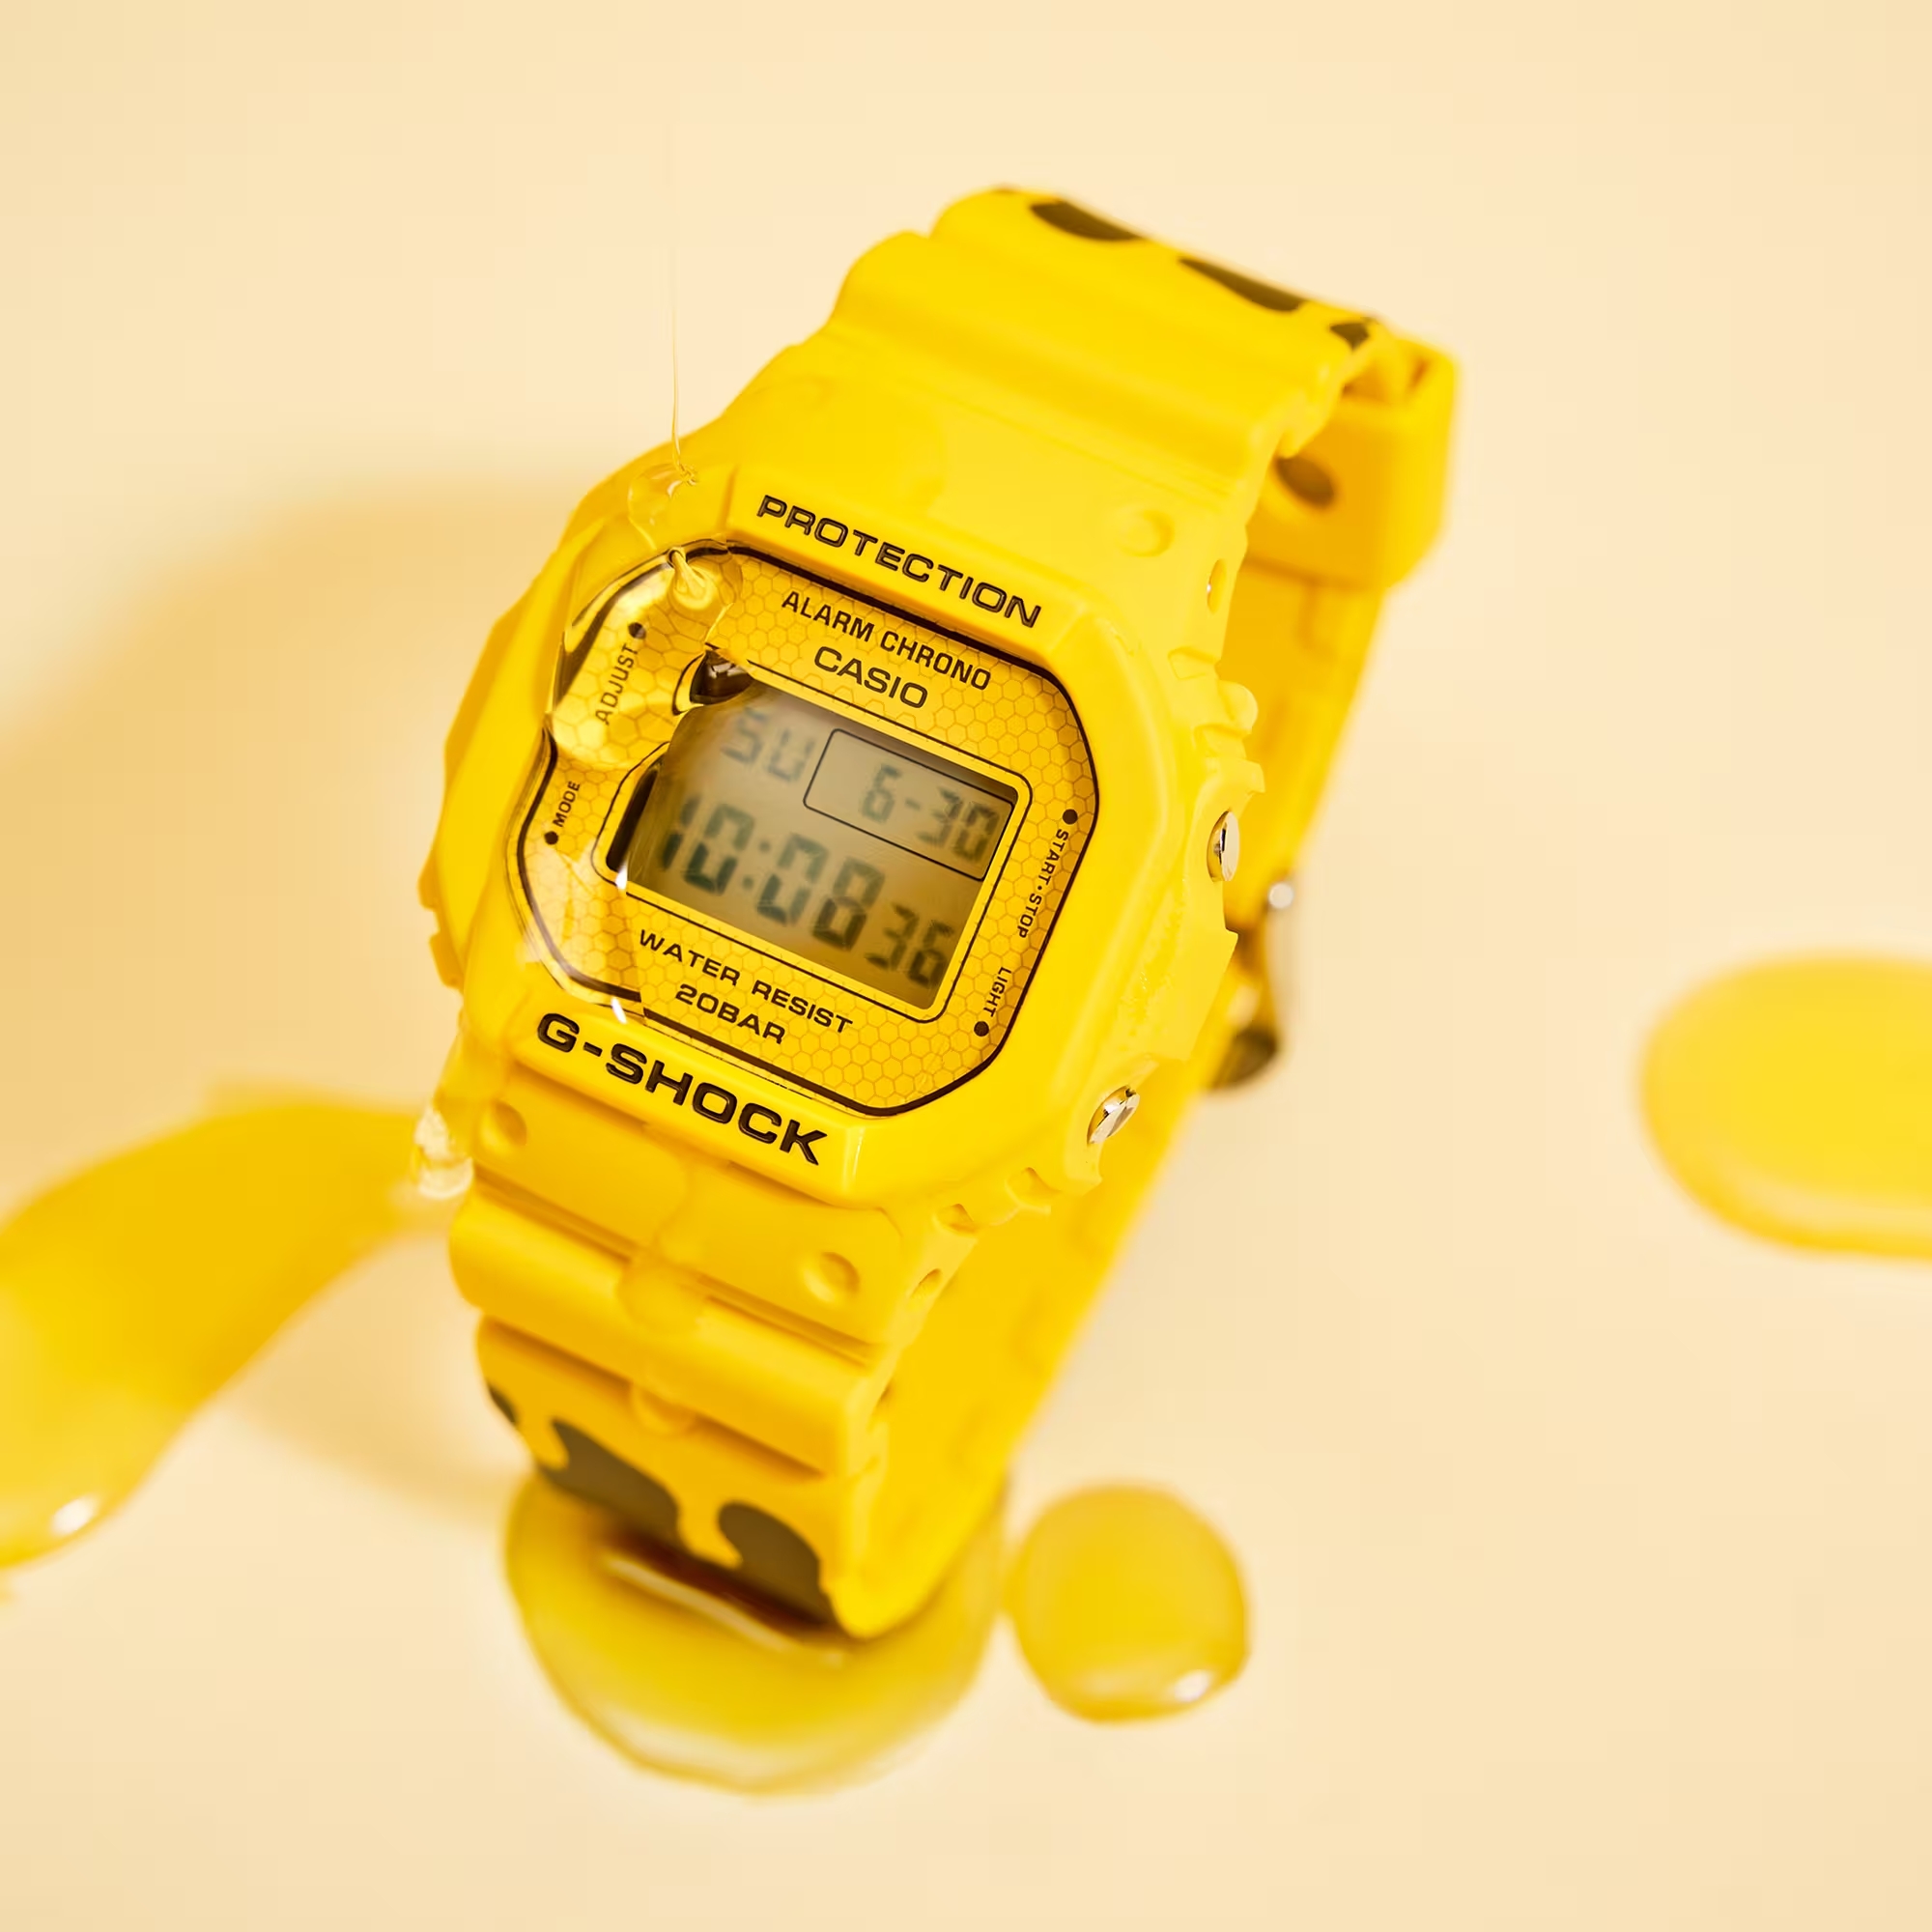 Honey watch. DW-5600 Honey.